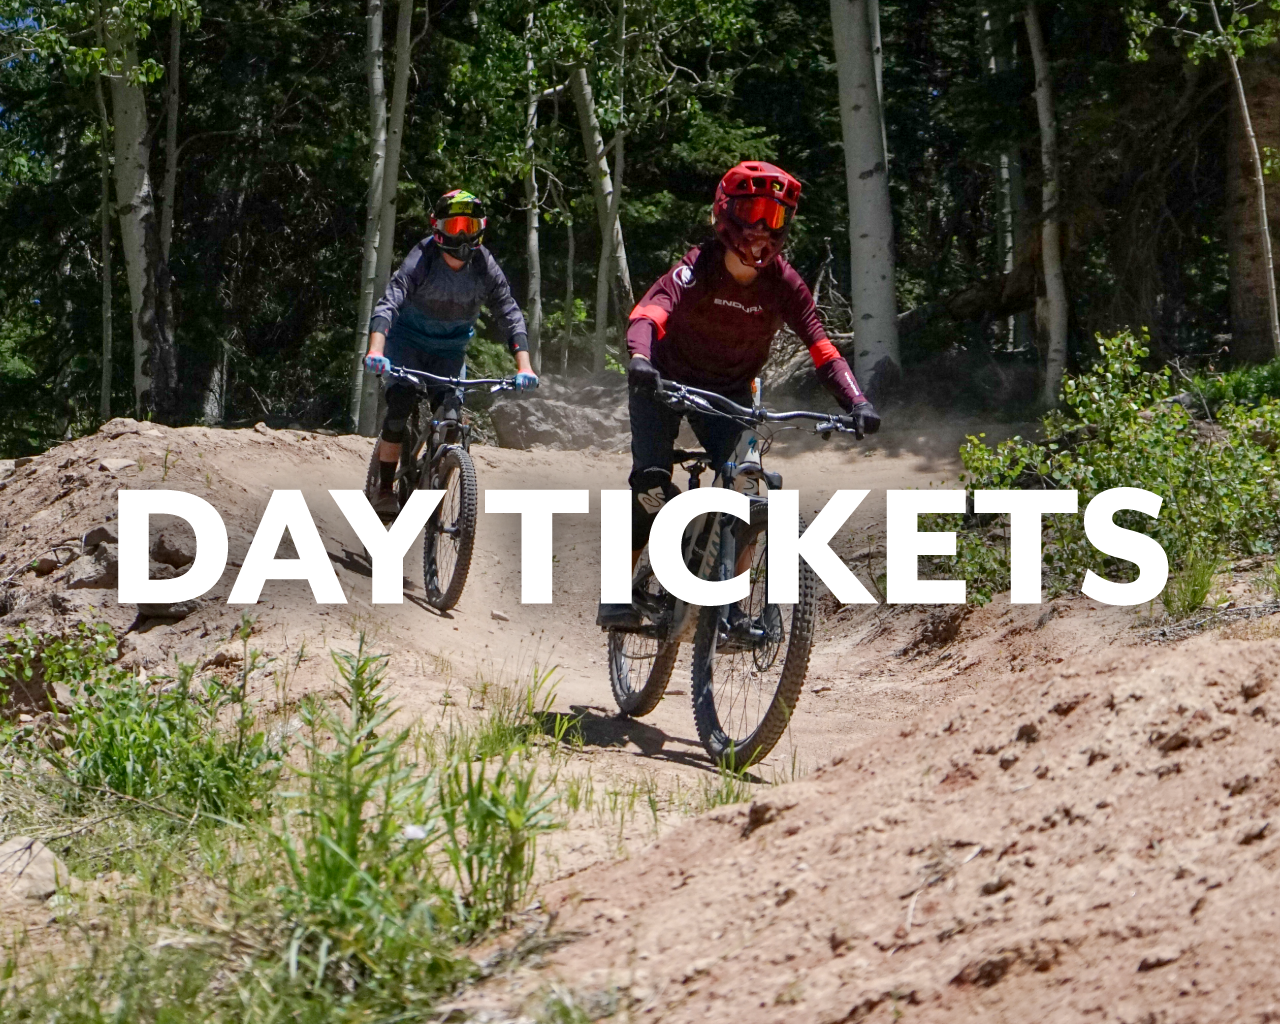 Day Tickets button, mountain bikers on trail at Powderhorn Mountain Resort